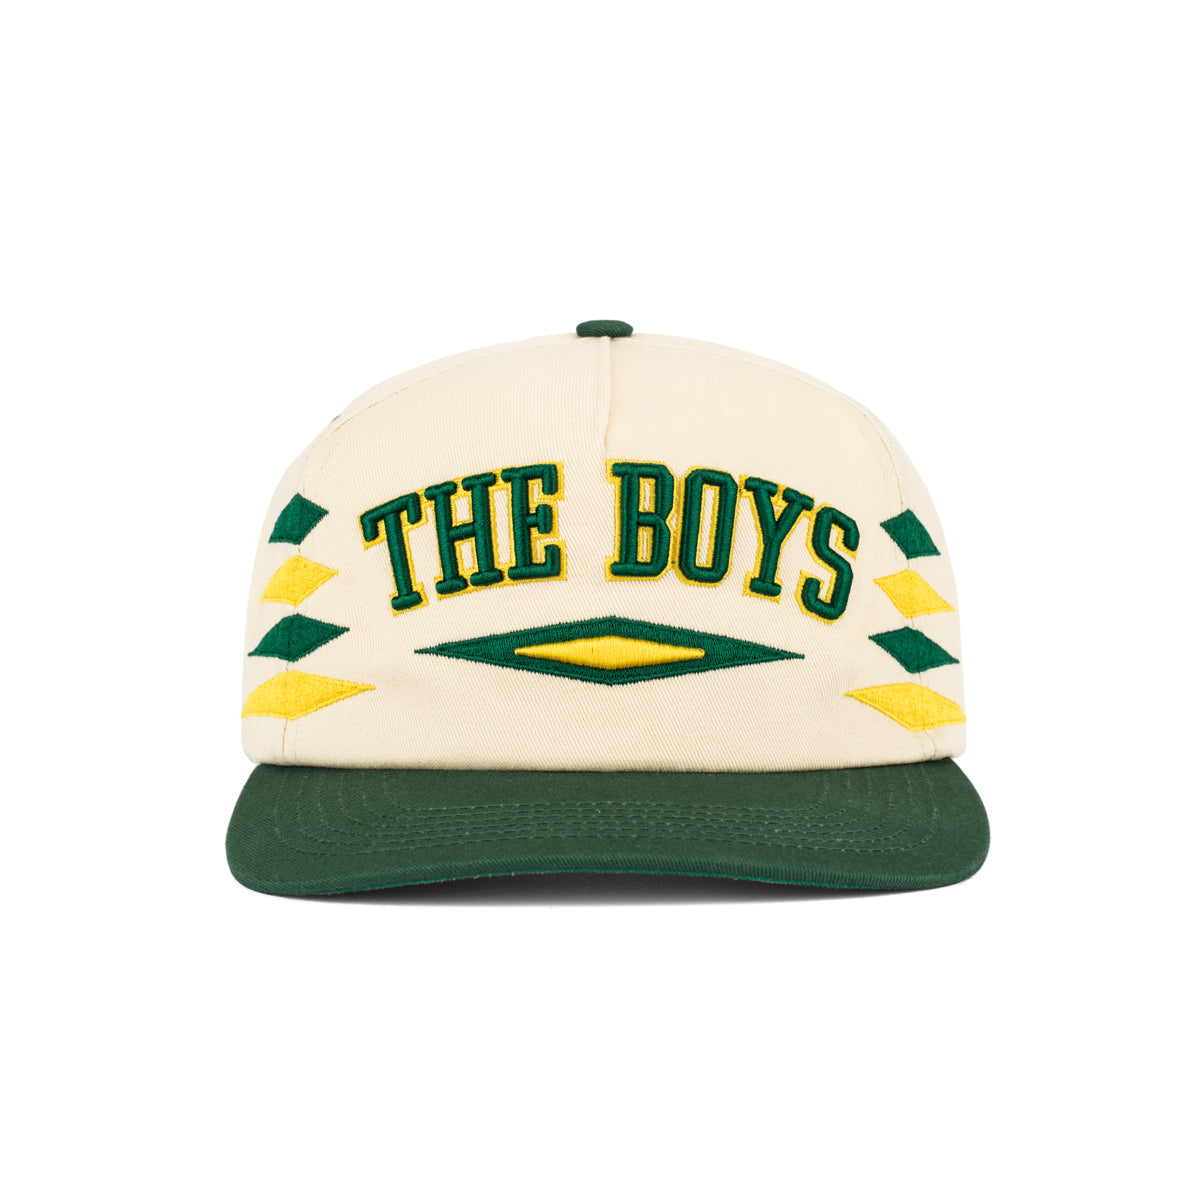 The Boys Diamond Retro Hat-Hats-Bussin With The Boys-Tan/Green-OS-Barstool Sports